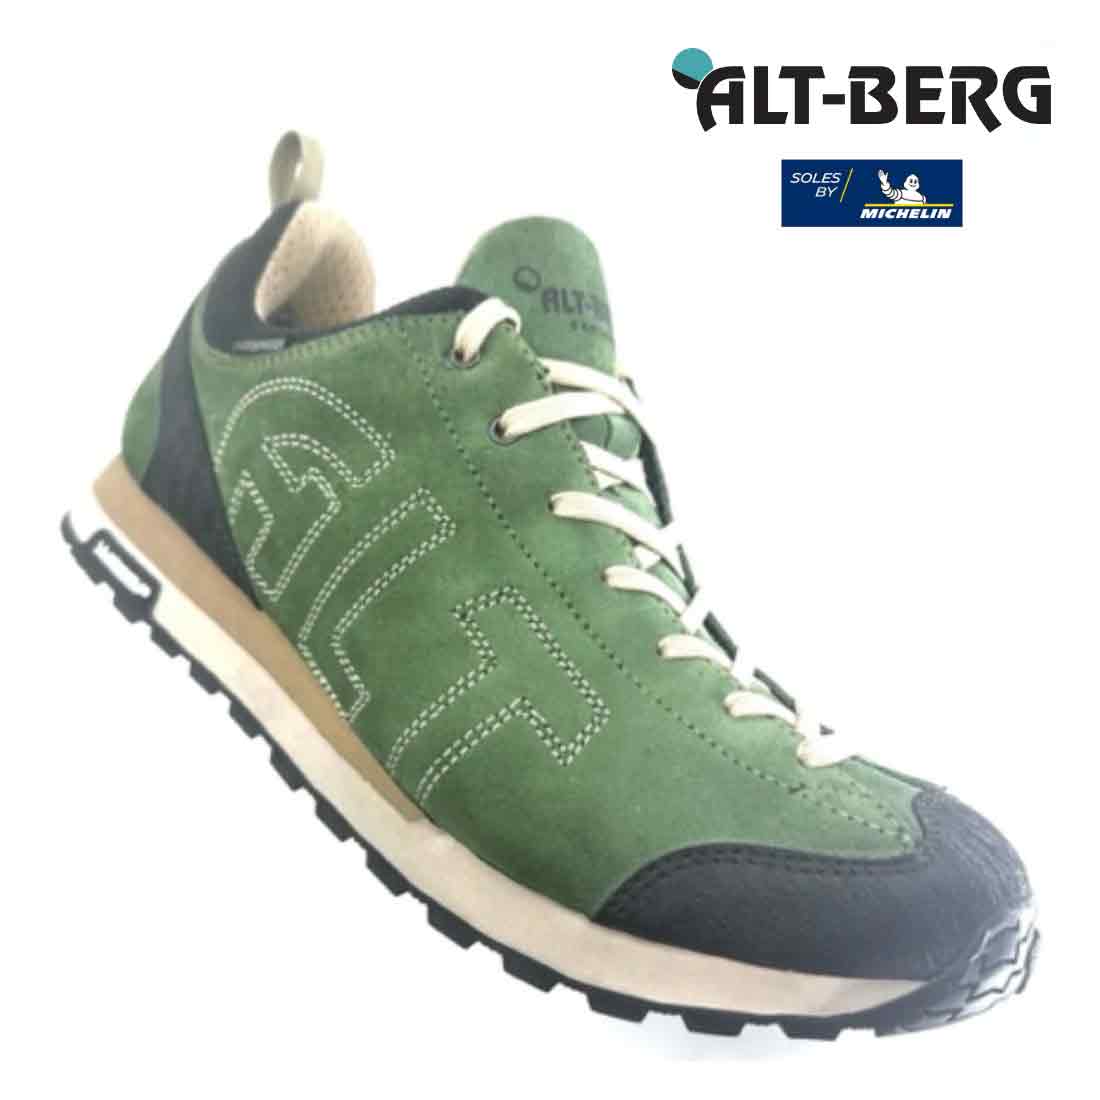 Altberg Wensley Waterproof Outdoor Shoe - John Bull Clothing